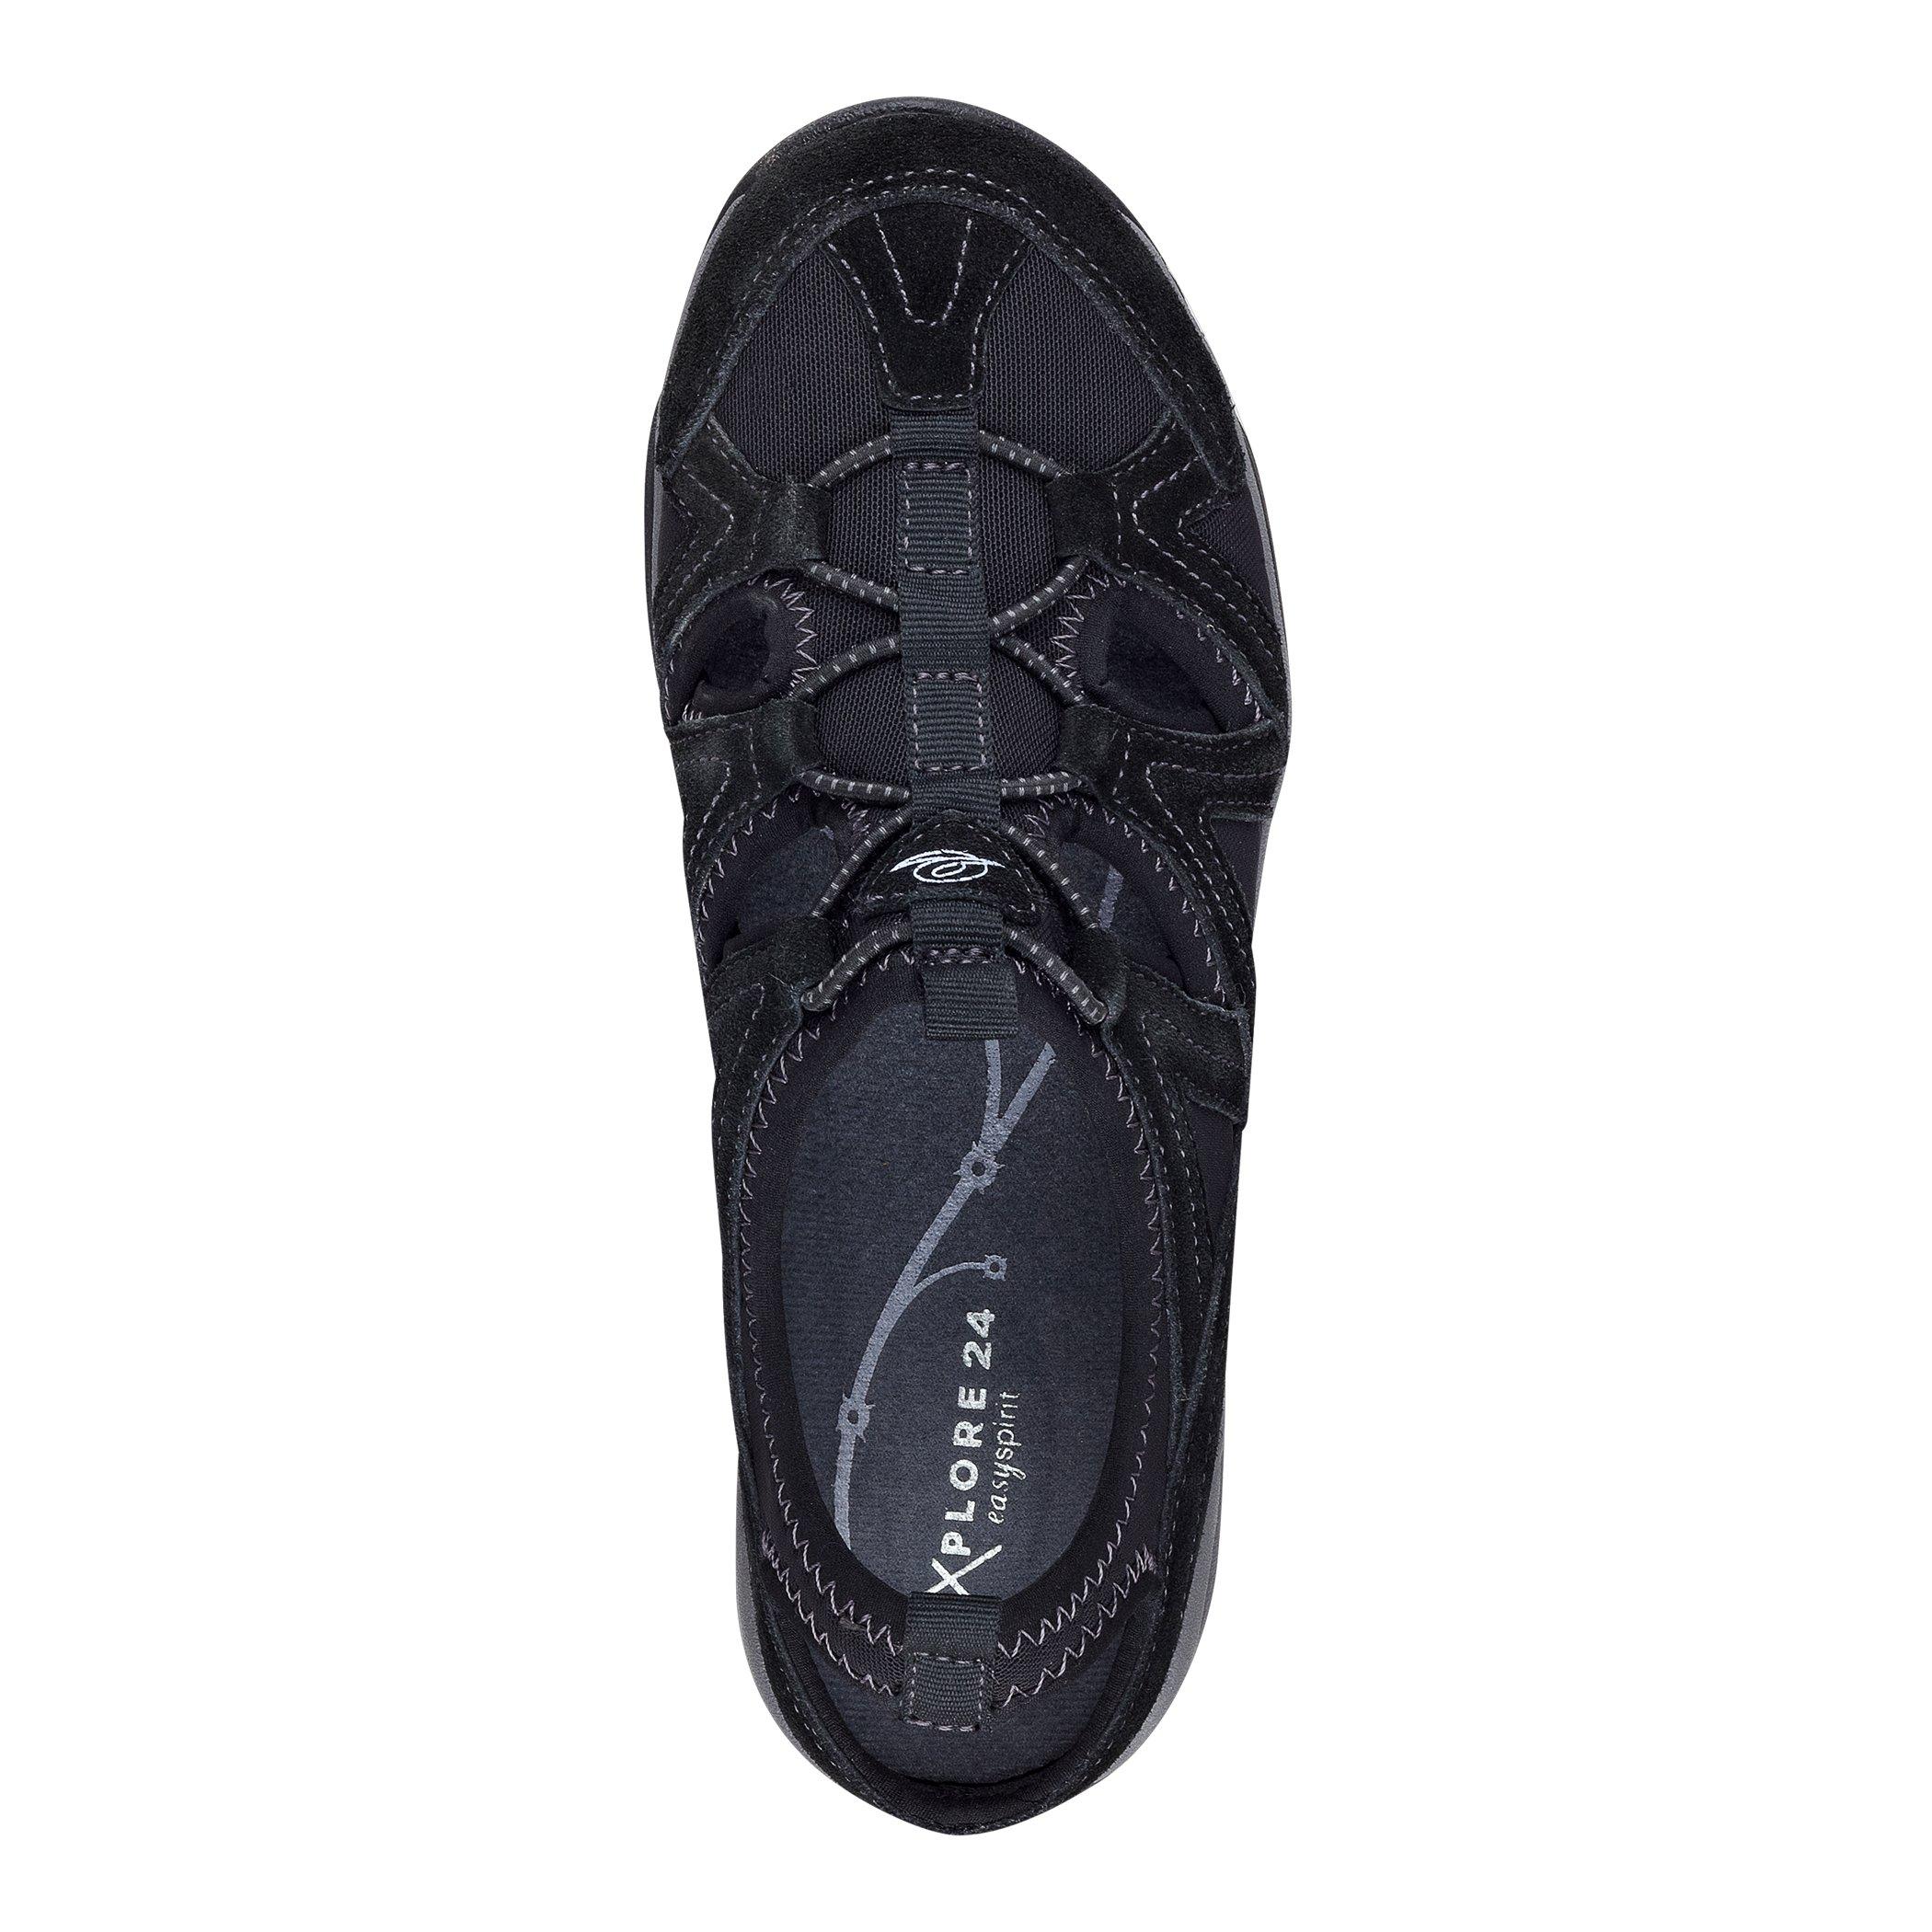 Easy Spirit Suede Earthen Walking Shoes in Black Suede (Black) - Lyst